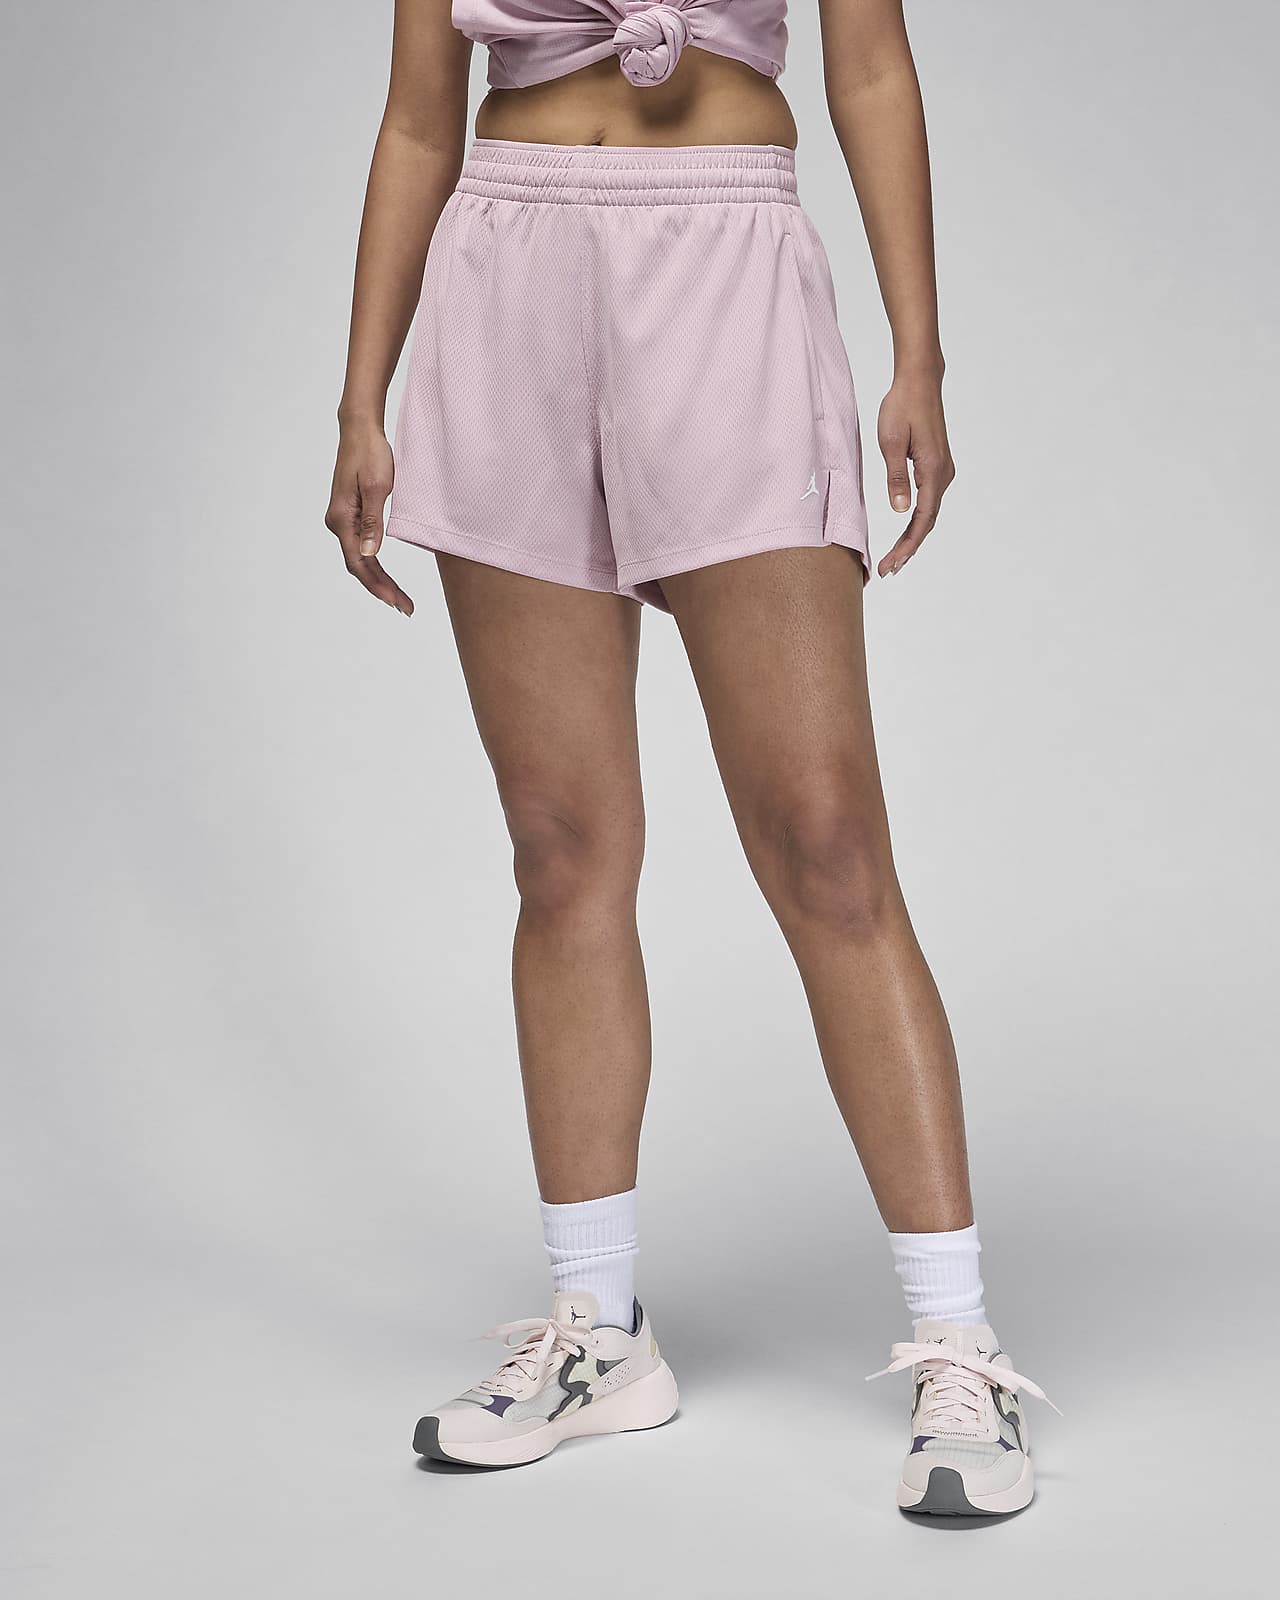 Nike Women's Summer Mesh Short